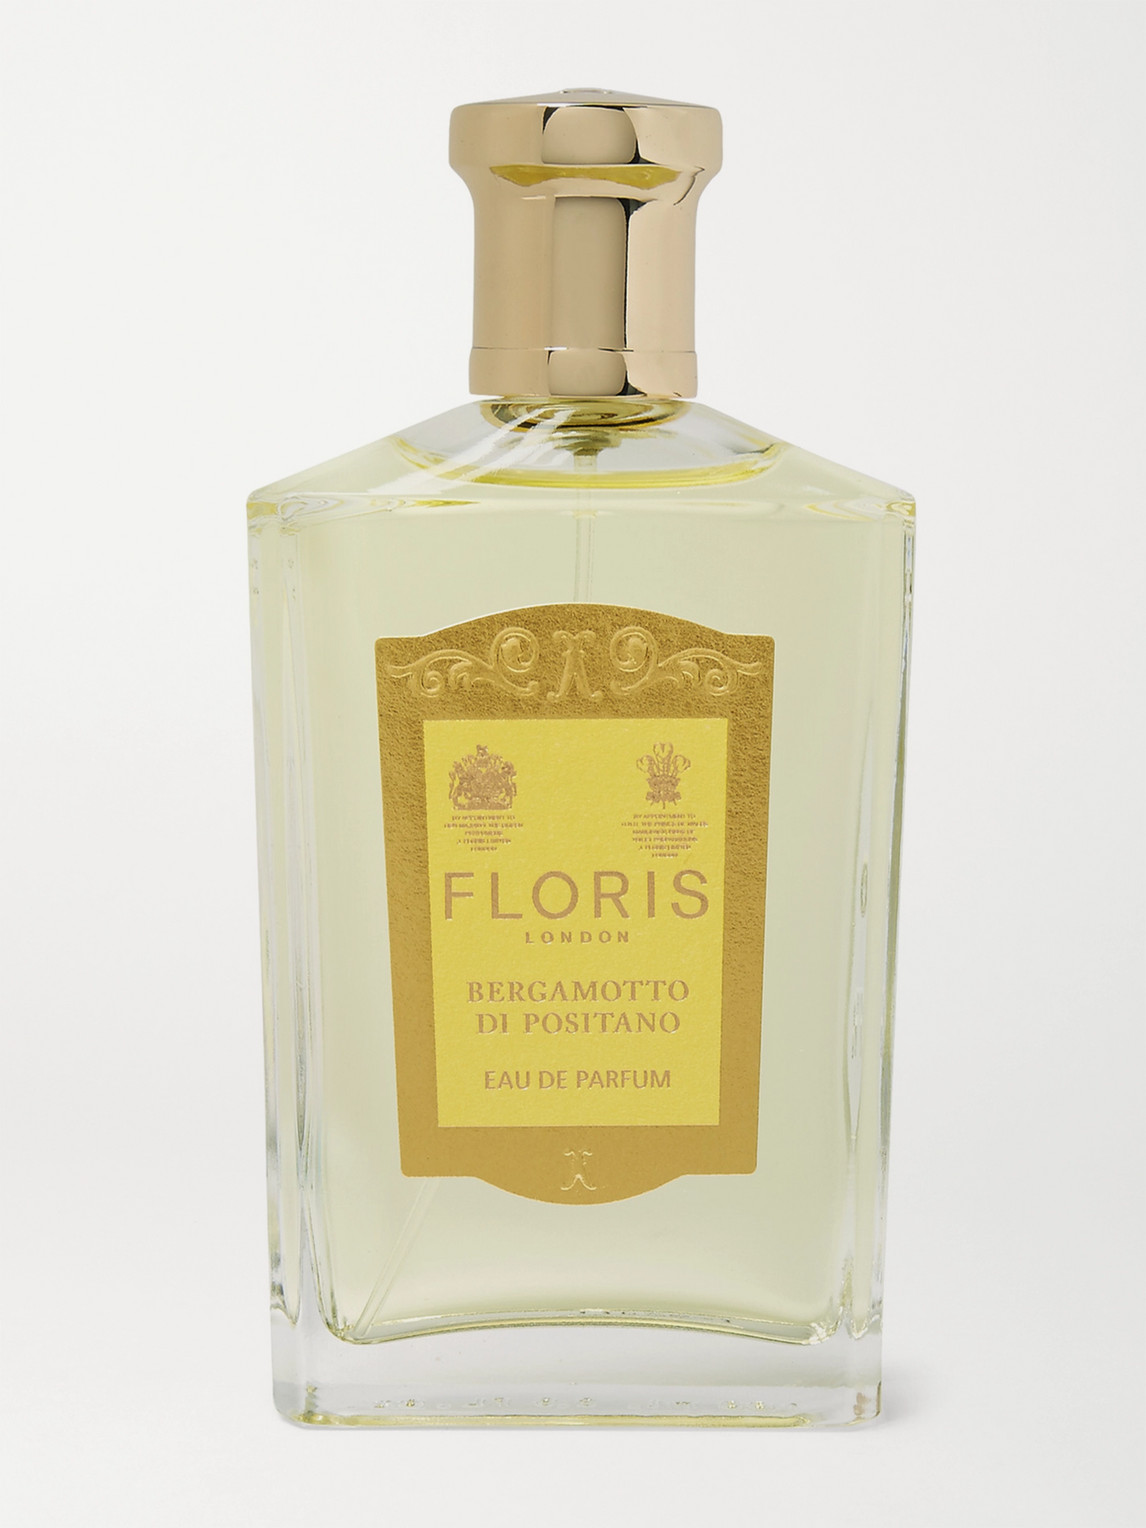 Floris London Bergamotto Di Positano Eau De Parfum In Colorless